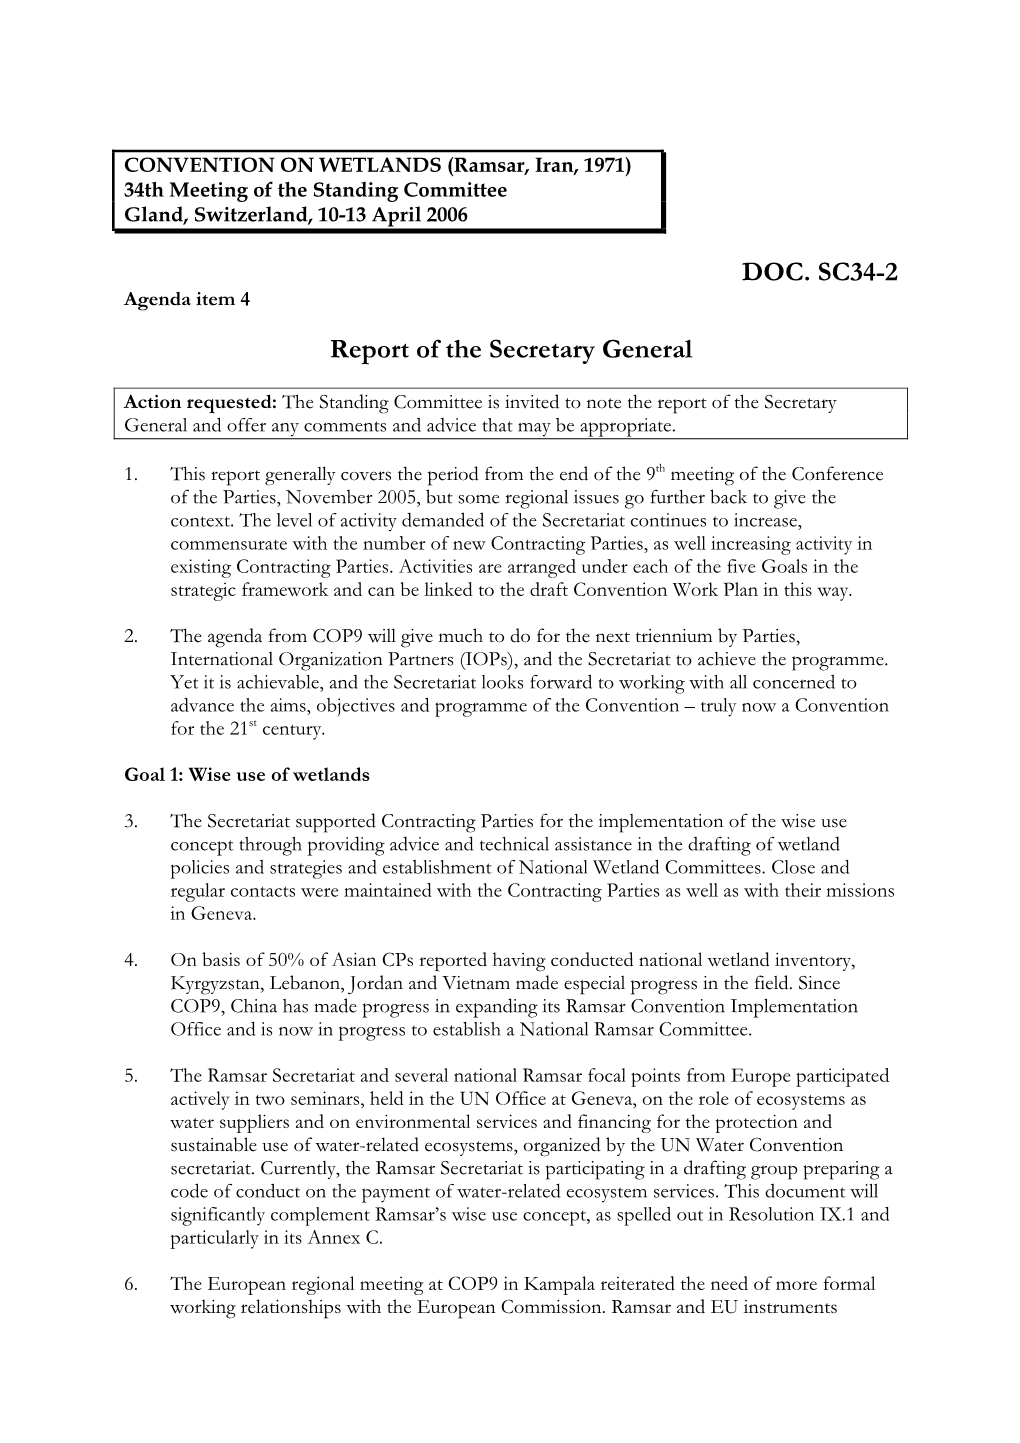 DOC. SC34-2 Report of the Secretary General